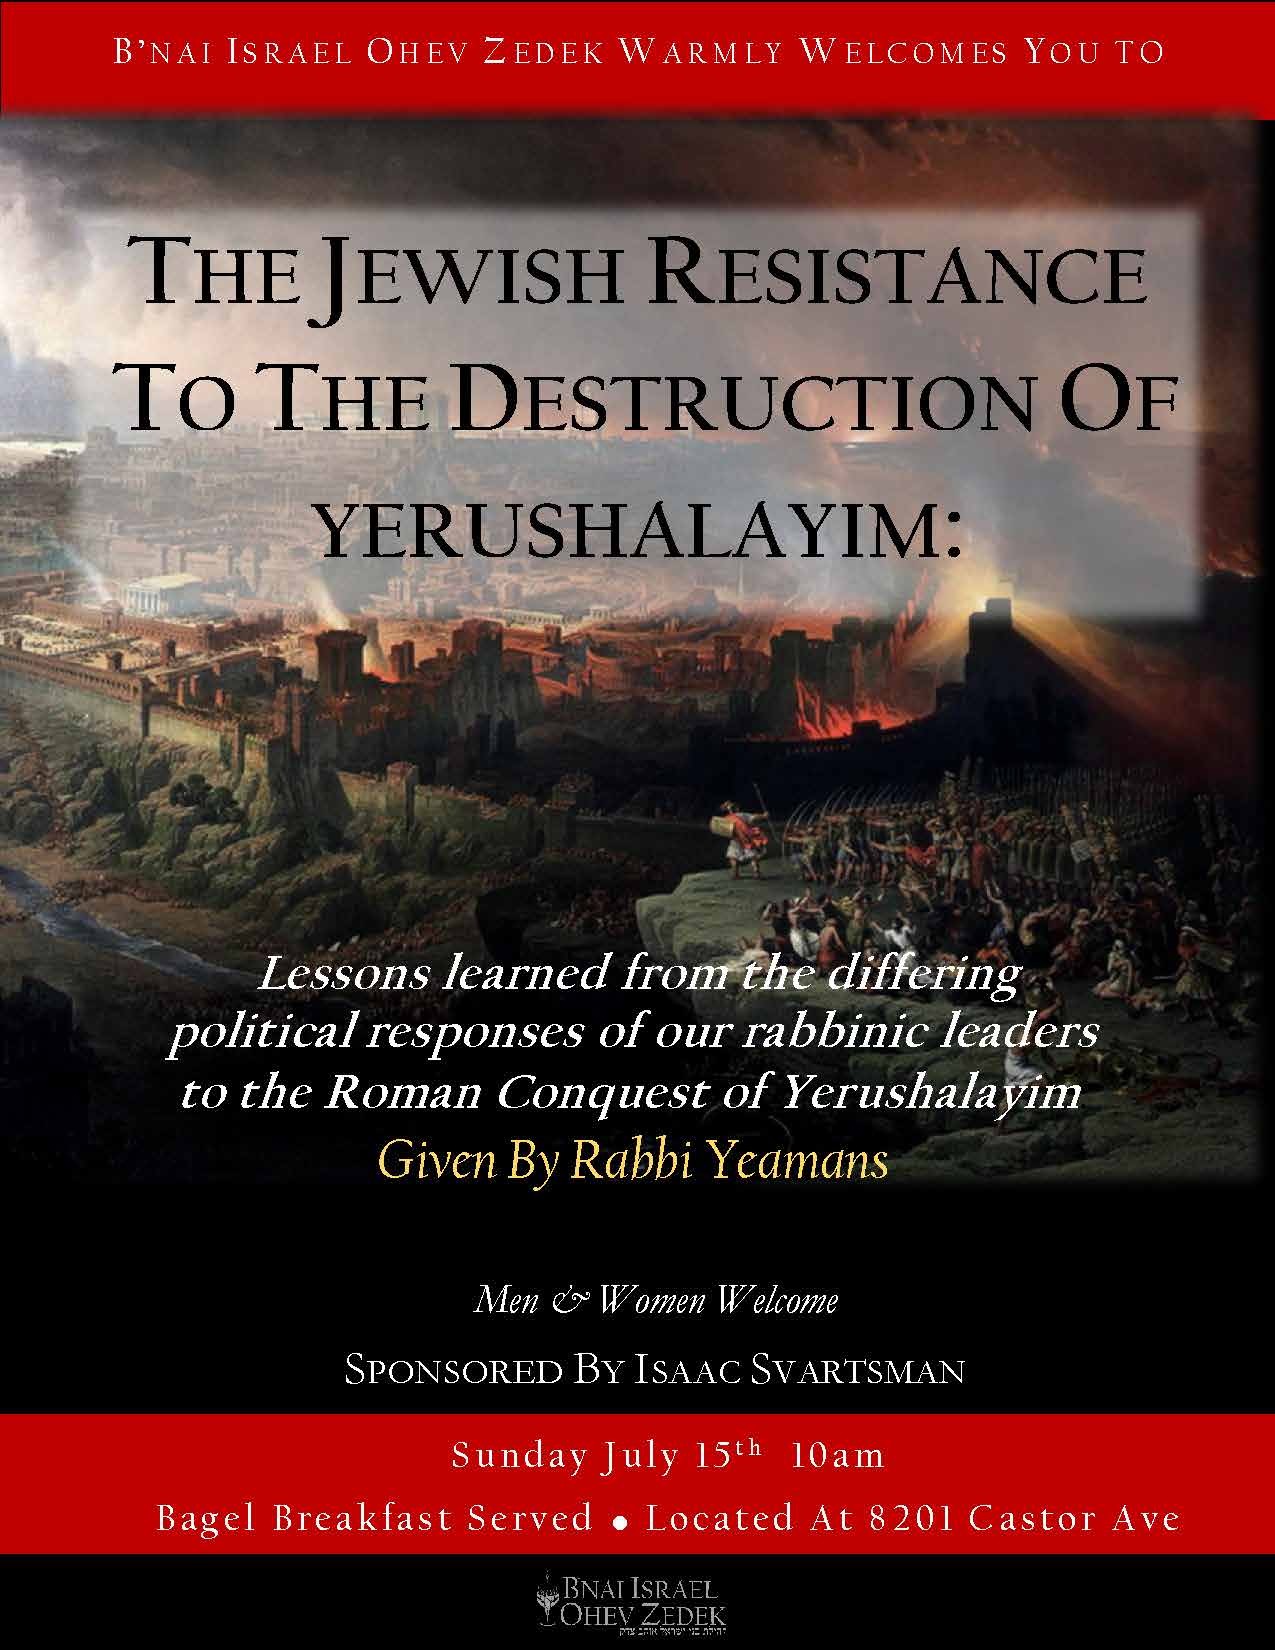 The Jewish Resistance To The Destruction of Yerushalayim